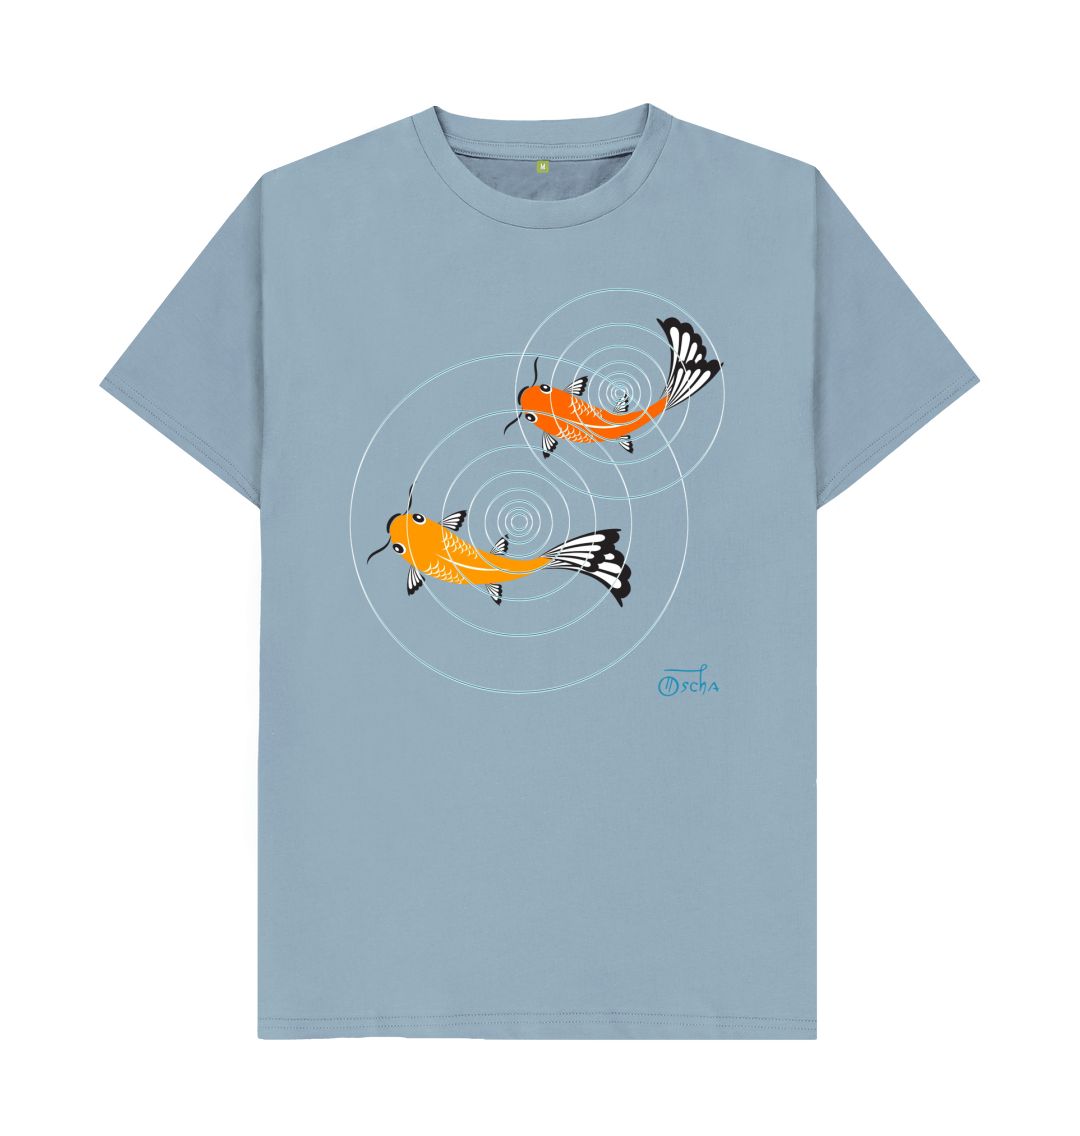 Koi Fish Shirt Koi Fish 1177 T-Shirts sold by Sugarplumcider, SKU 12416535